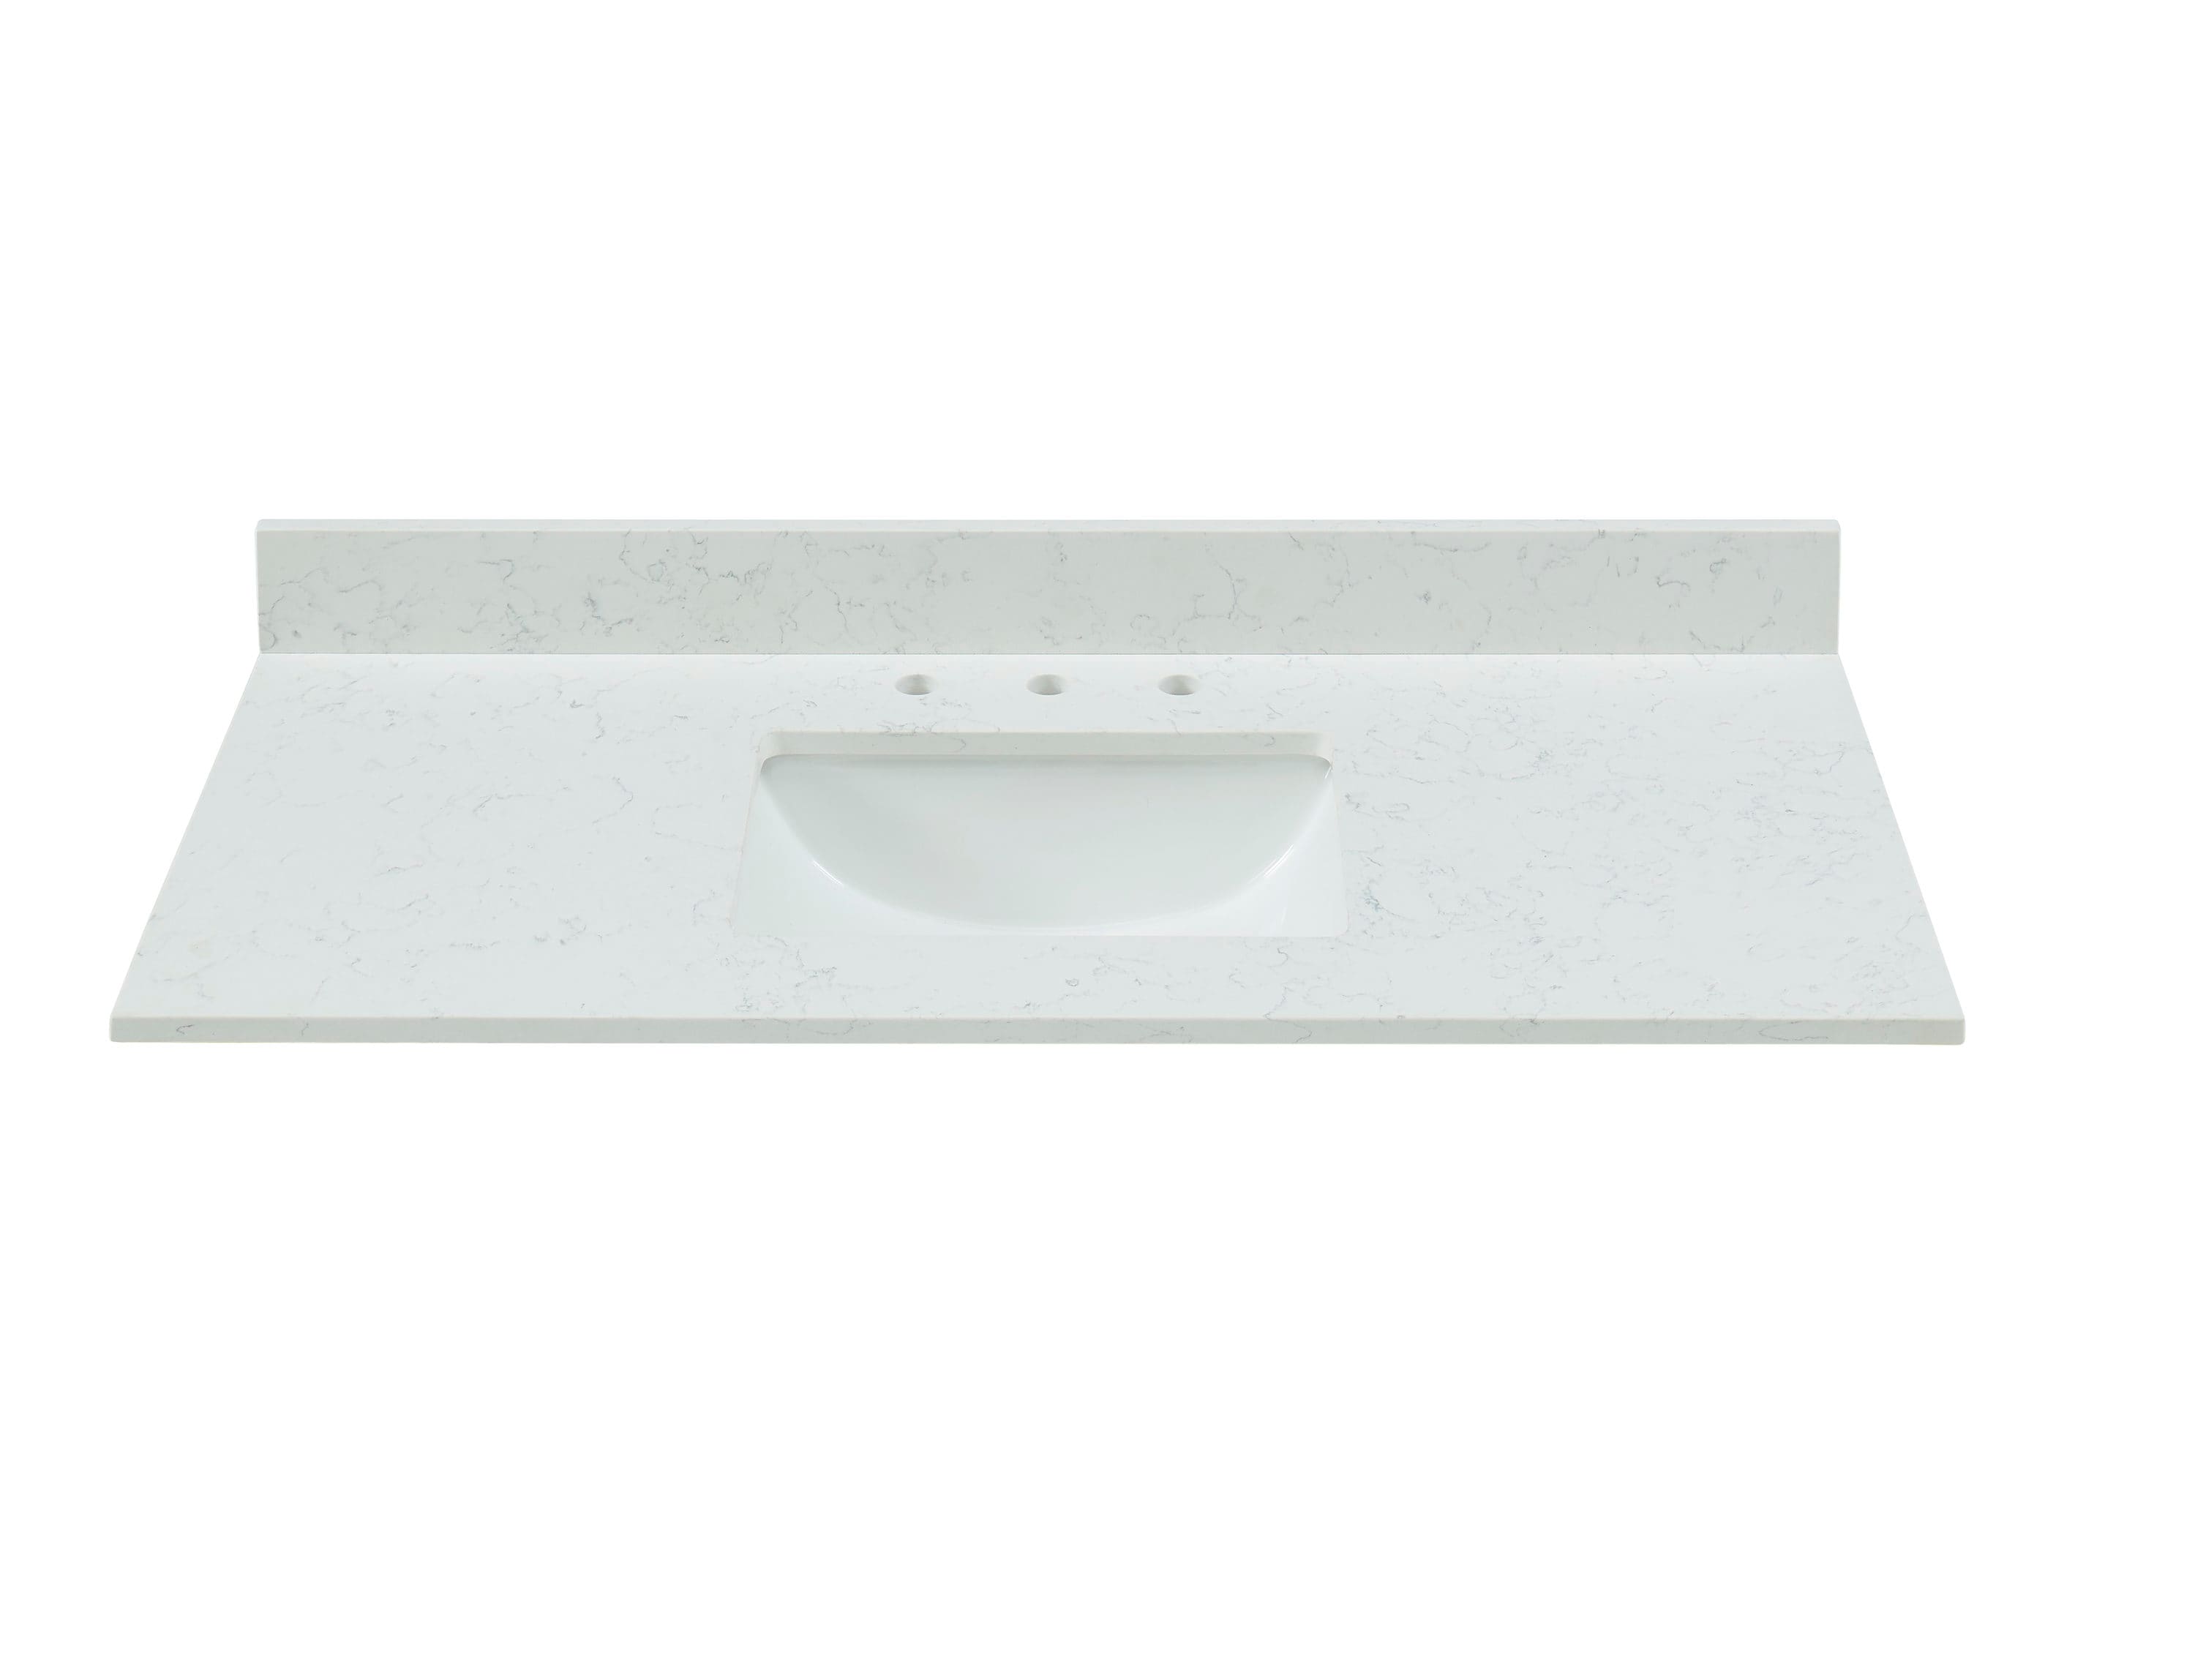 Bestview 49-in x 22-in Carrara White Quartz Undermount Single Sink ...